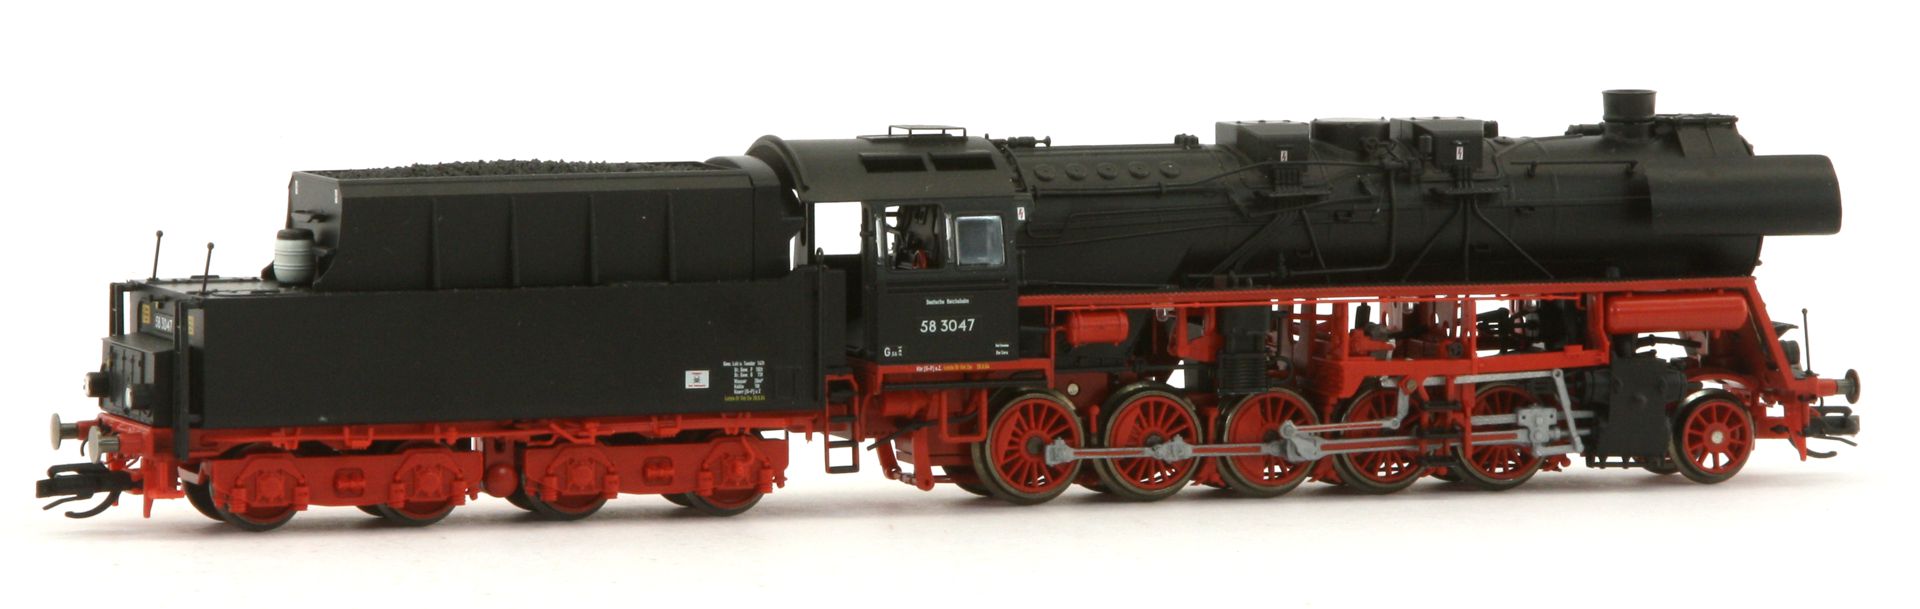 Saxonia 120086 - Dampflok BR 58.30, 58 3047, DR, Ep.III